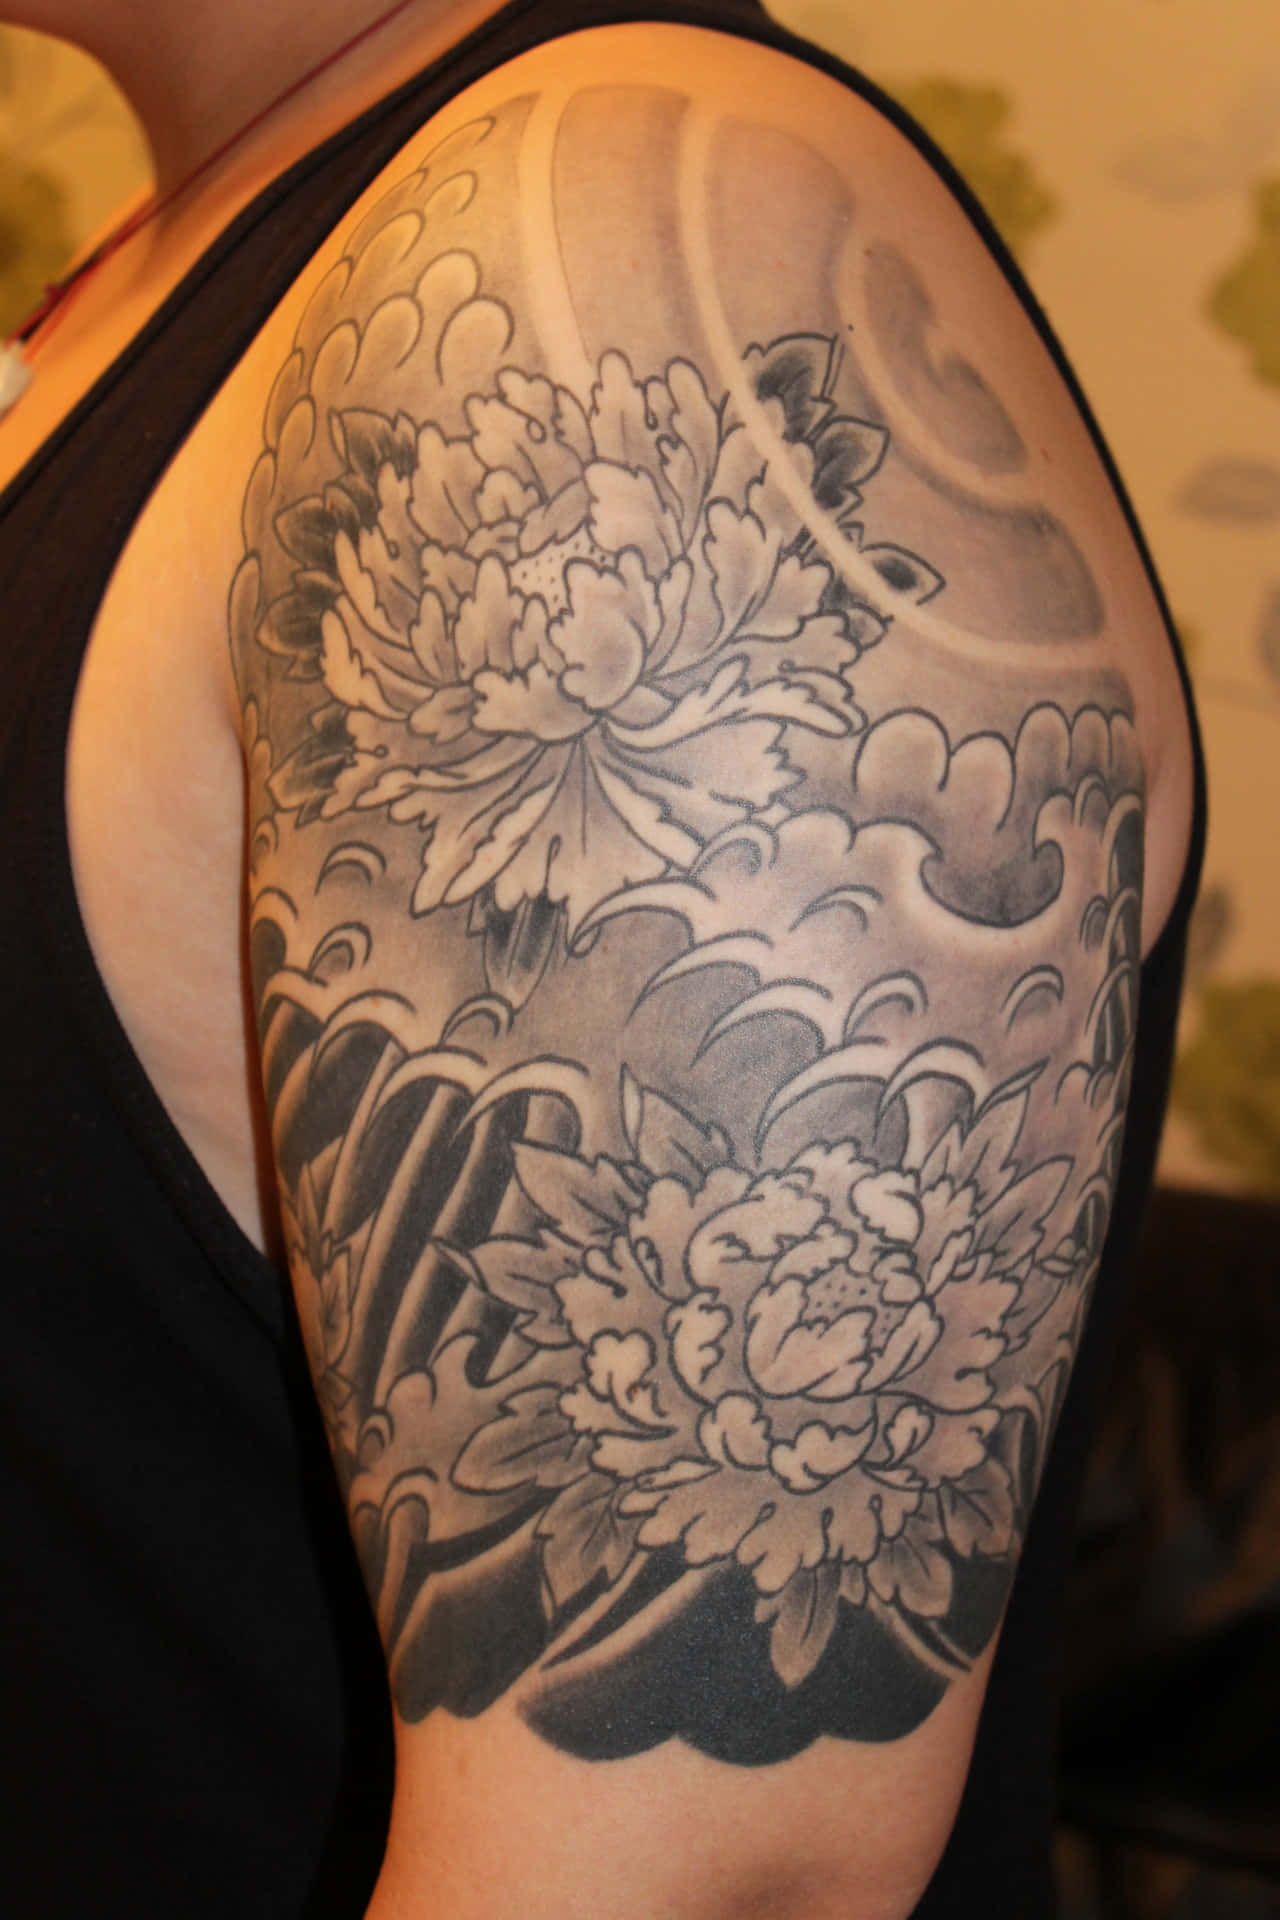 Intricate Tattoo Art On Skin